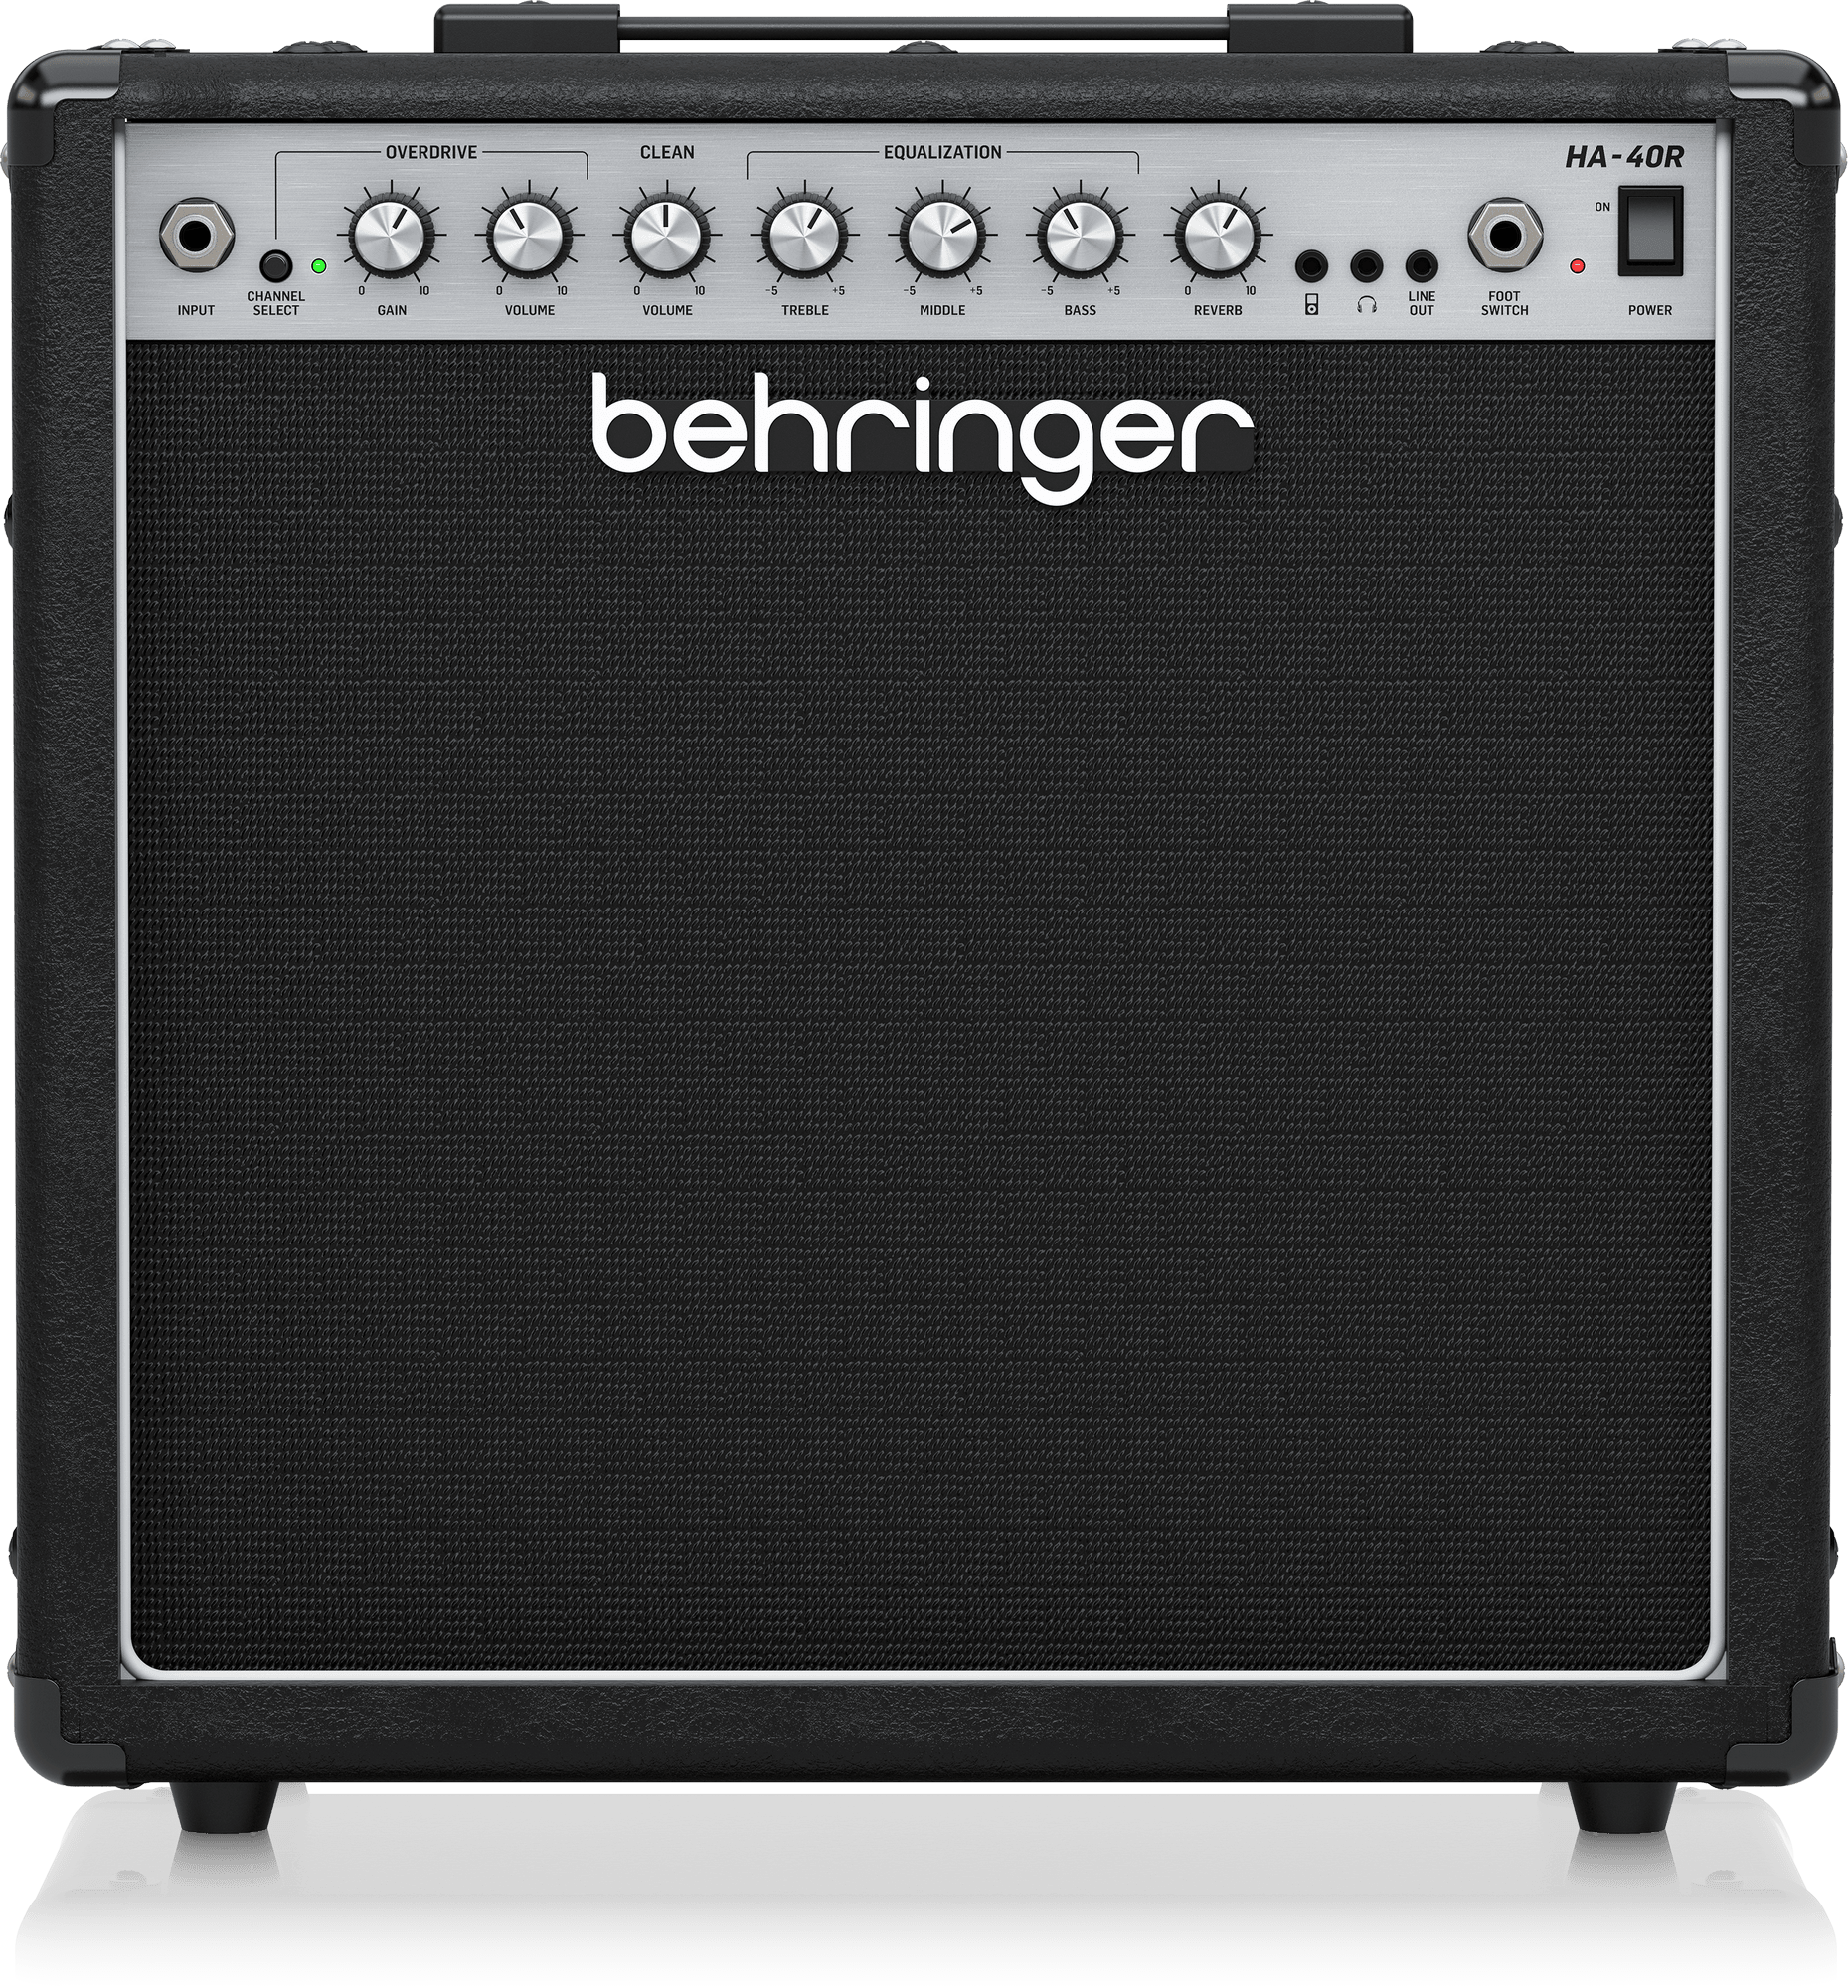 Behringer HA-40R 40 Watt Guitar Amplifier with 2 Independent Channels, VTC Tube Modeling, Reverb and Original Bugera 10" Speaker | BEHRINGER , Zoso Music